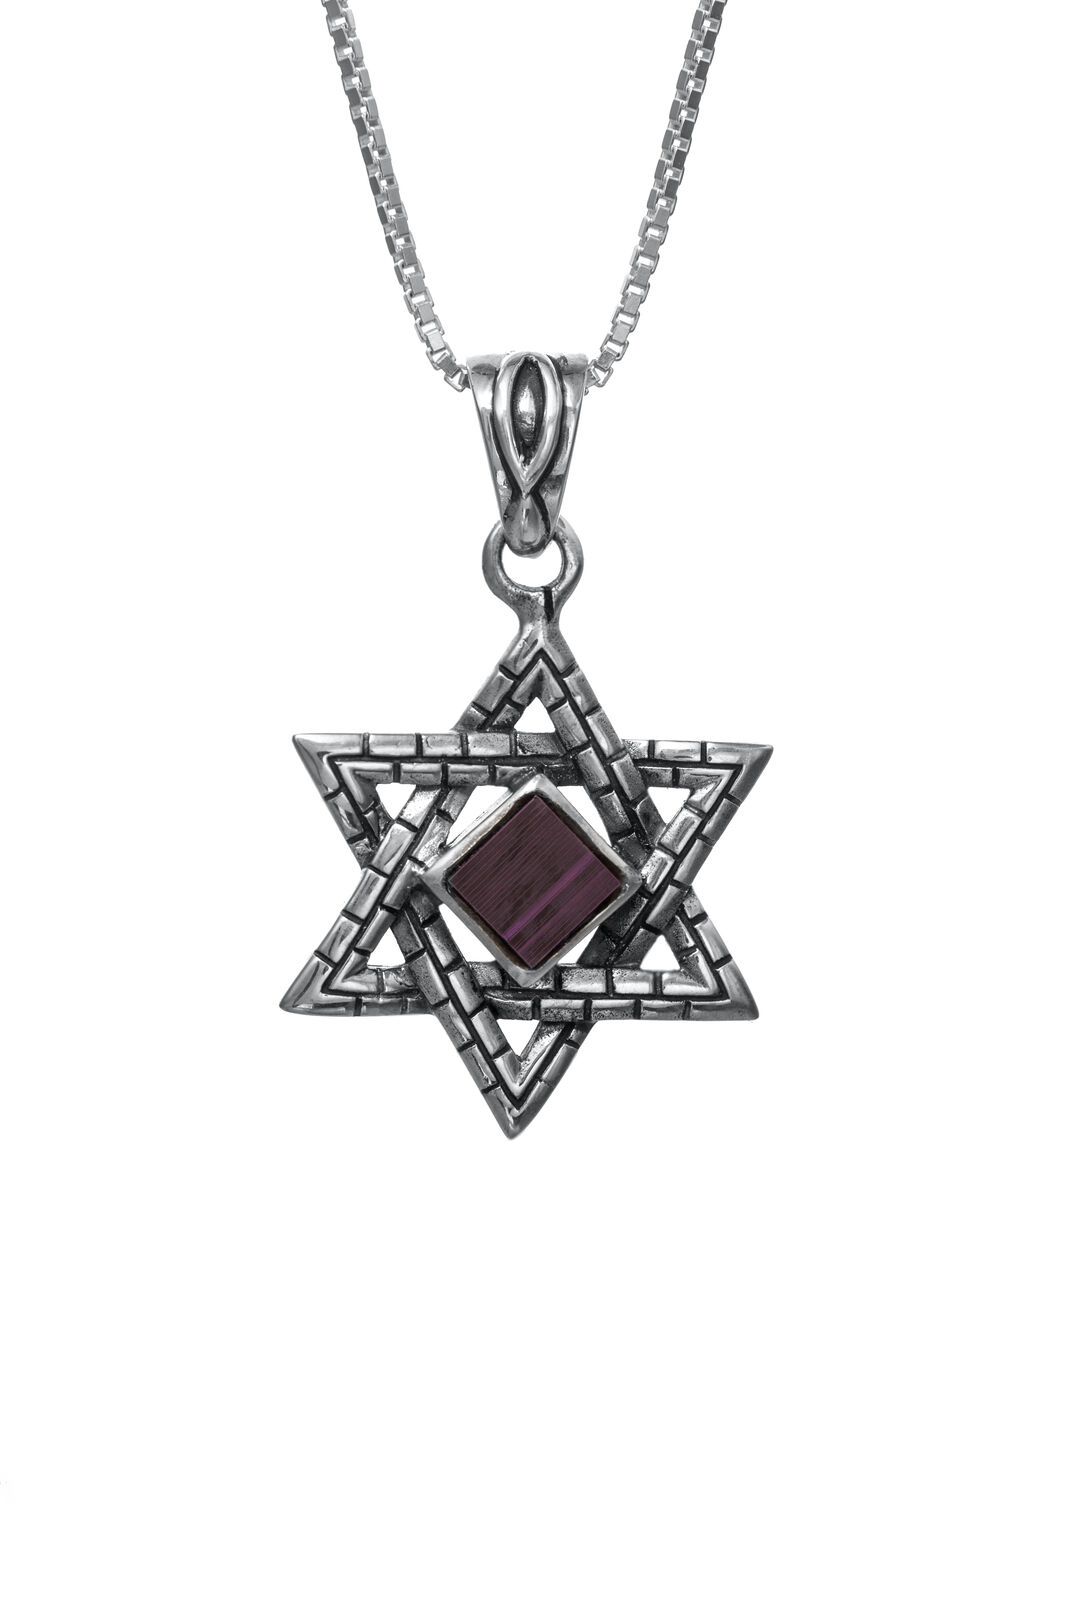 Magen David with Nano Bible Torah Pendant Jerusalem Stones Necklace Silver 925